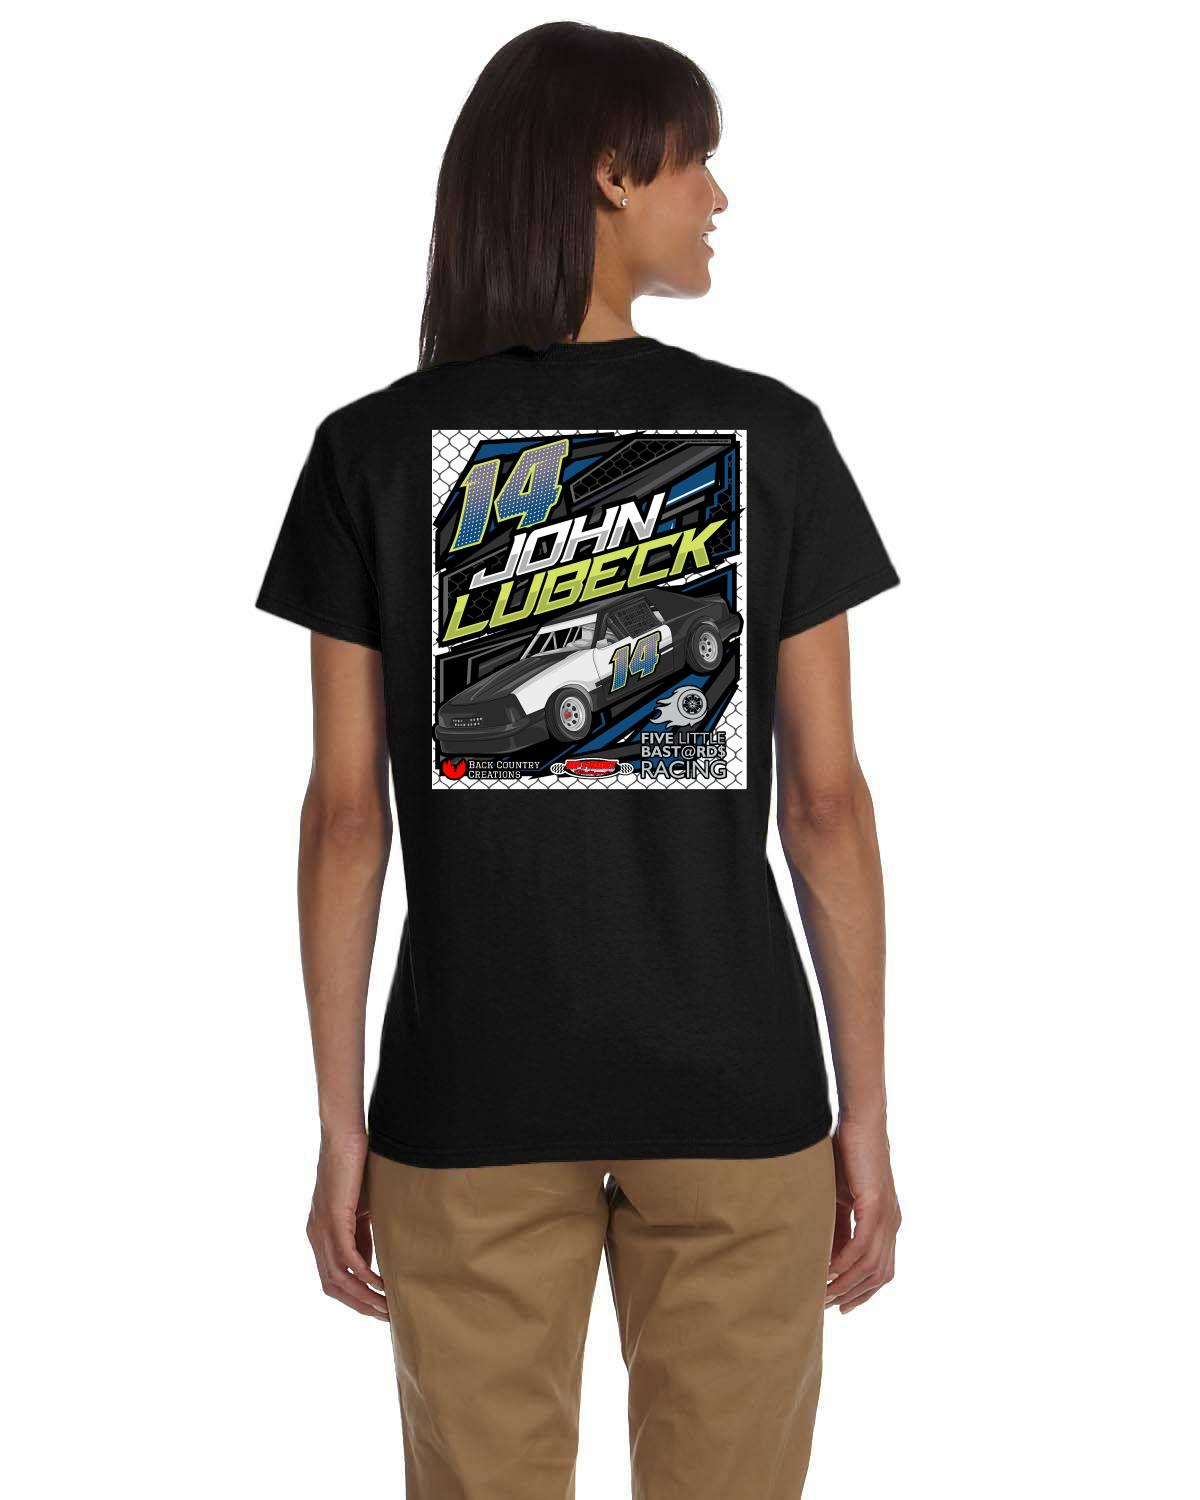 John Lubeck / Upfront Motorsports Ladies' T-Shirt